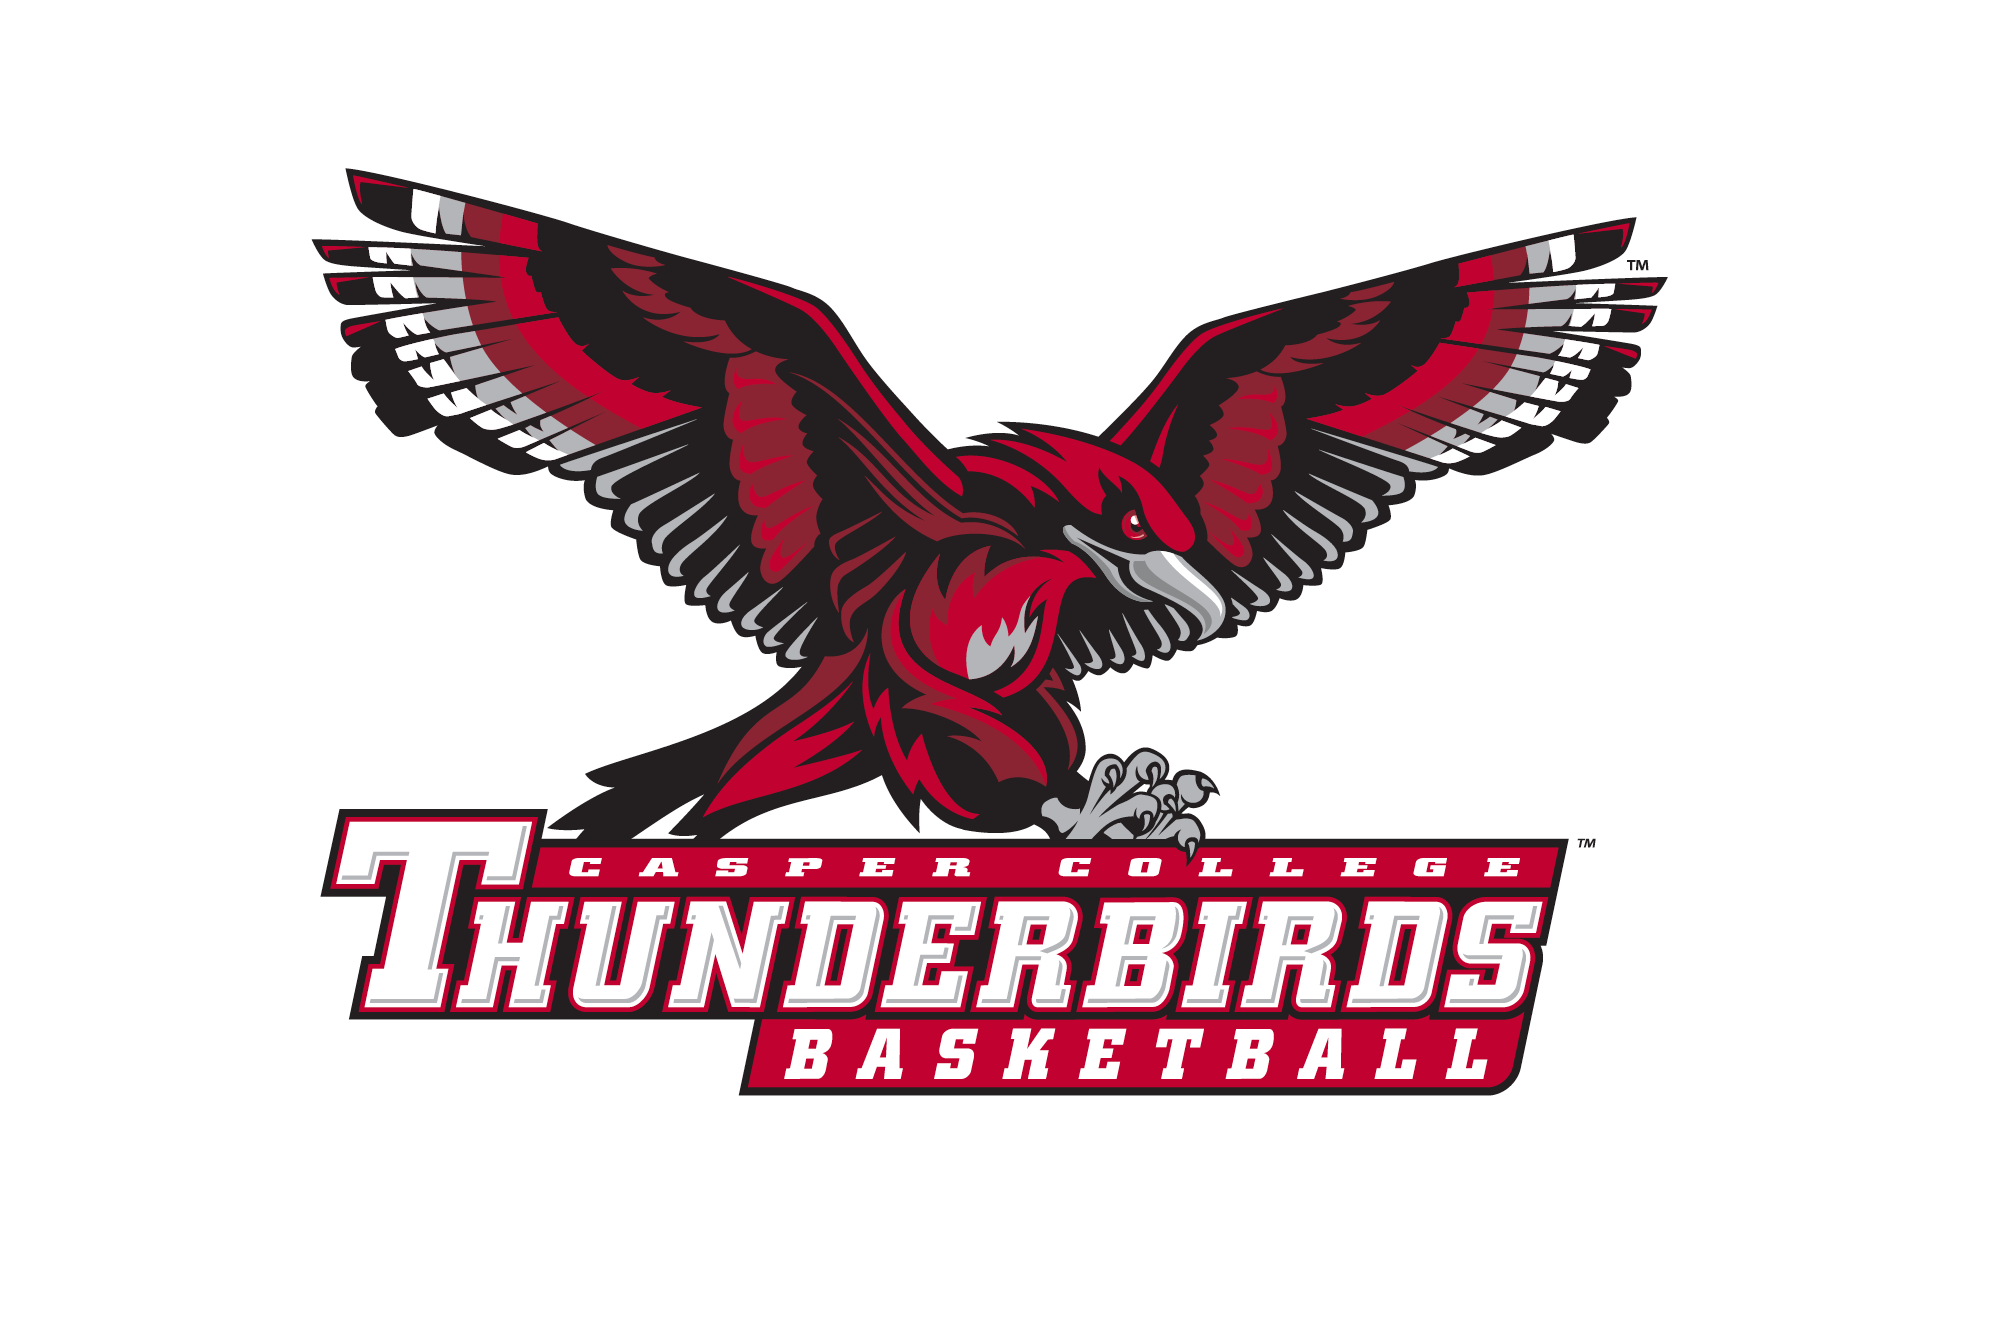 Casper College Thunderbird Basketball logo